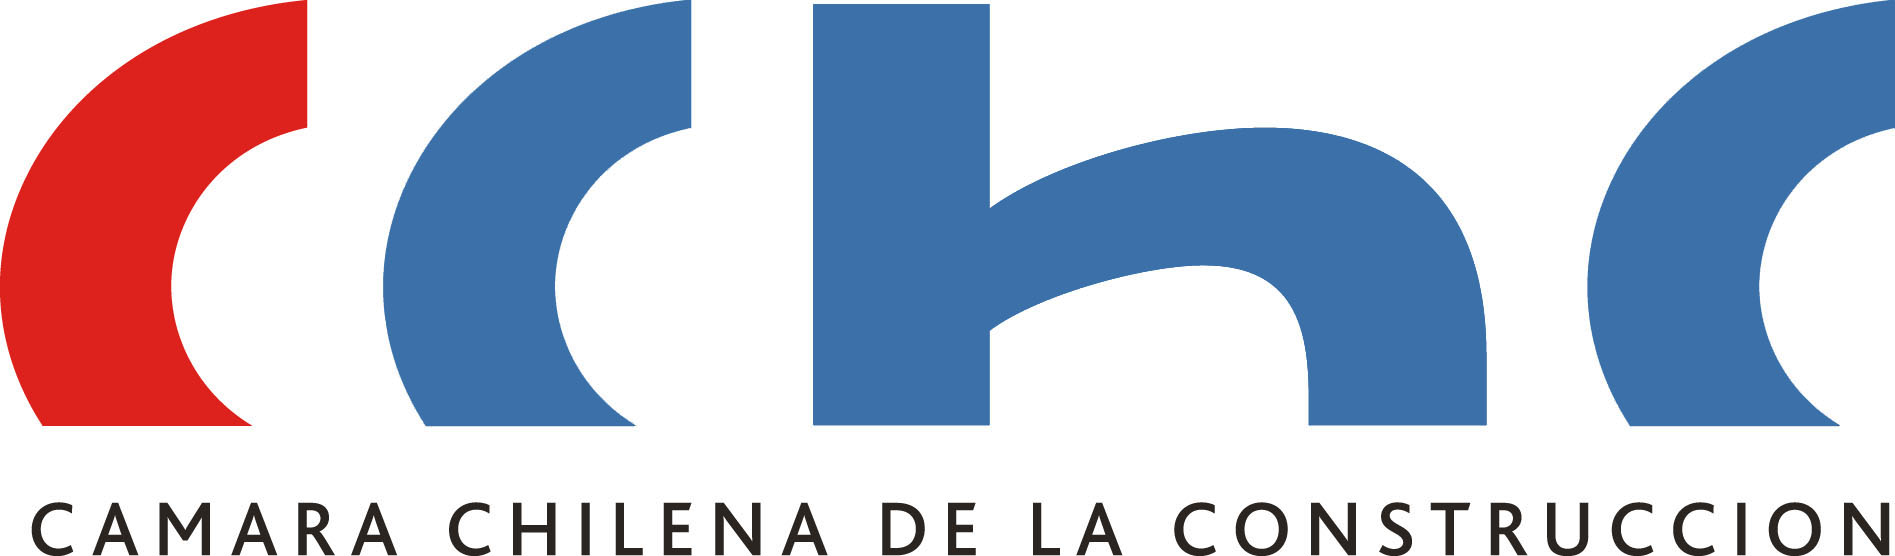 Logo-CChC2.jpg